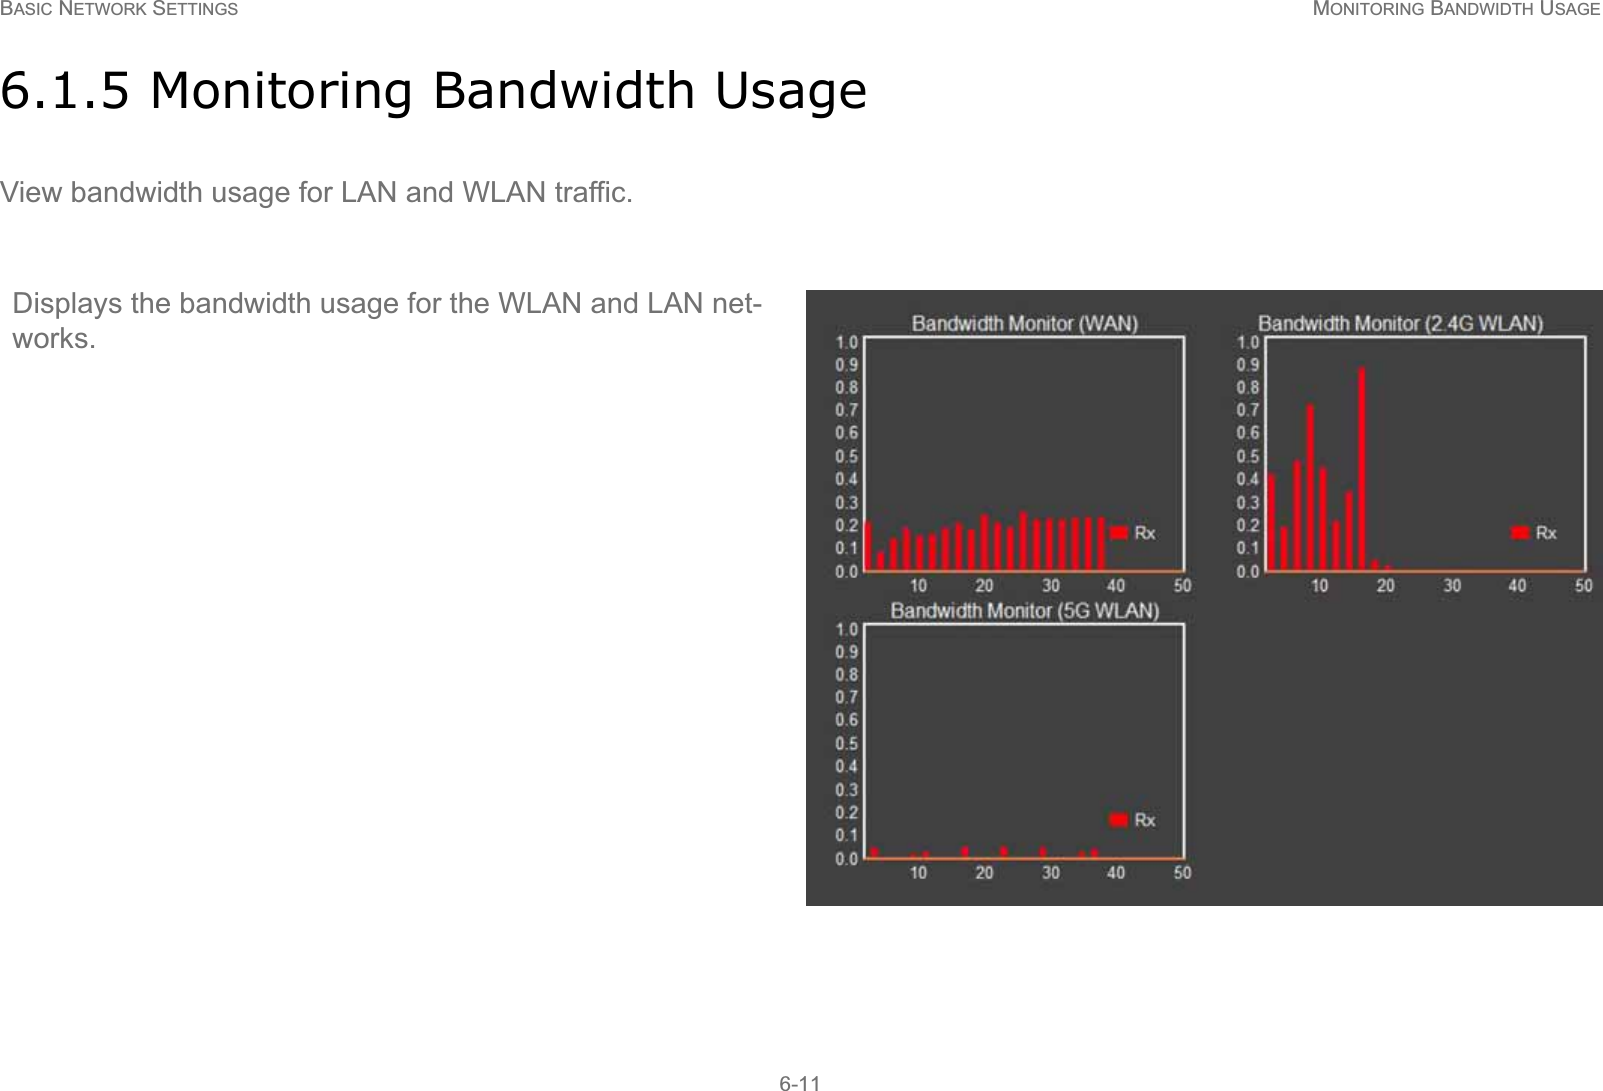 BASIC NETWORK SETTINGS MONITORING BANDWIDTH USAGE6-116.1.5 Monitoring Bandwidth UsageView bandwidth usage for LAN and WLAN traffic.Displays the bandwidth usage for the WLAN and LAN net-works.